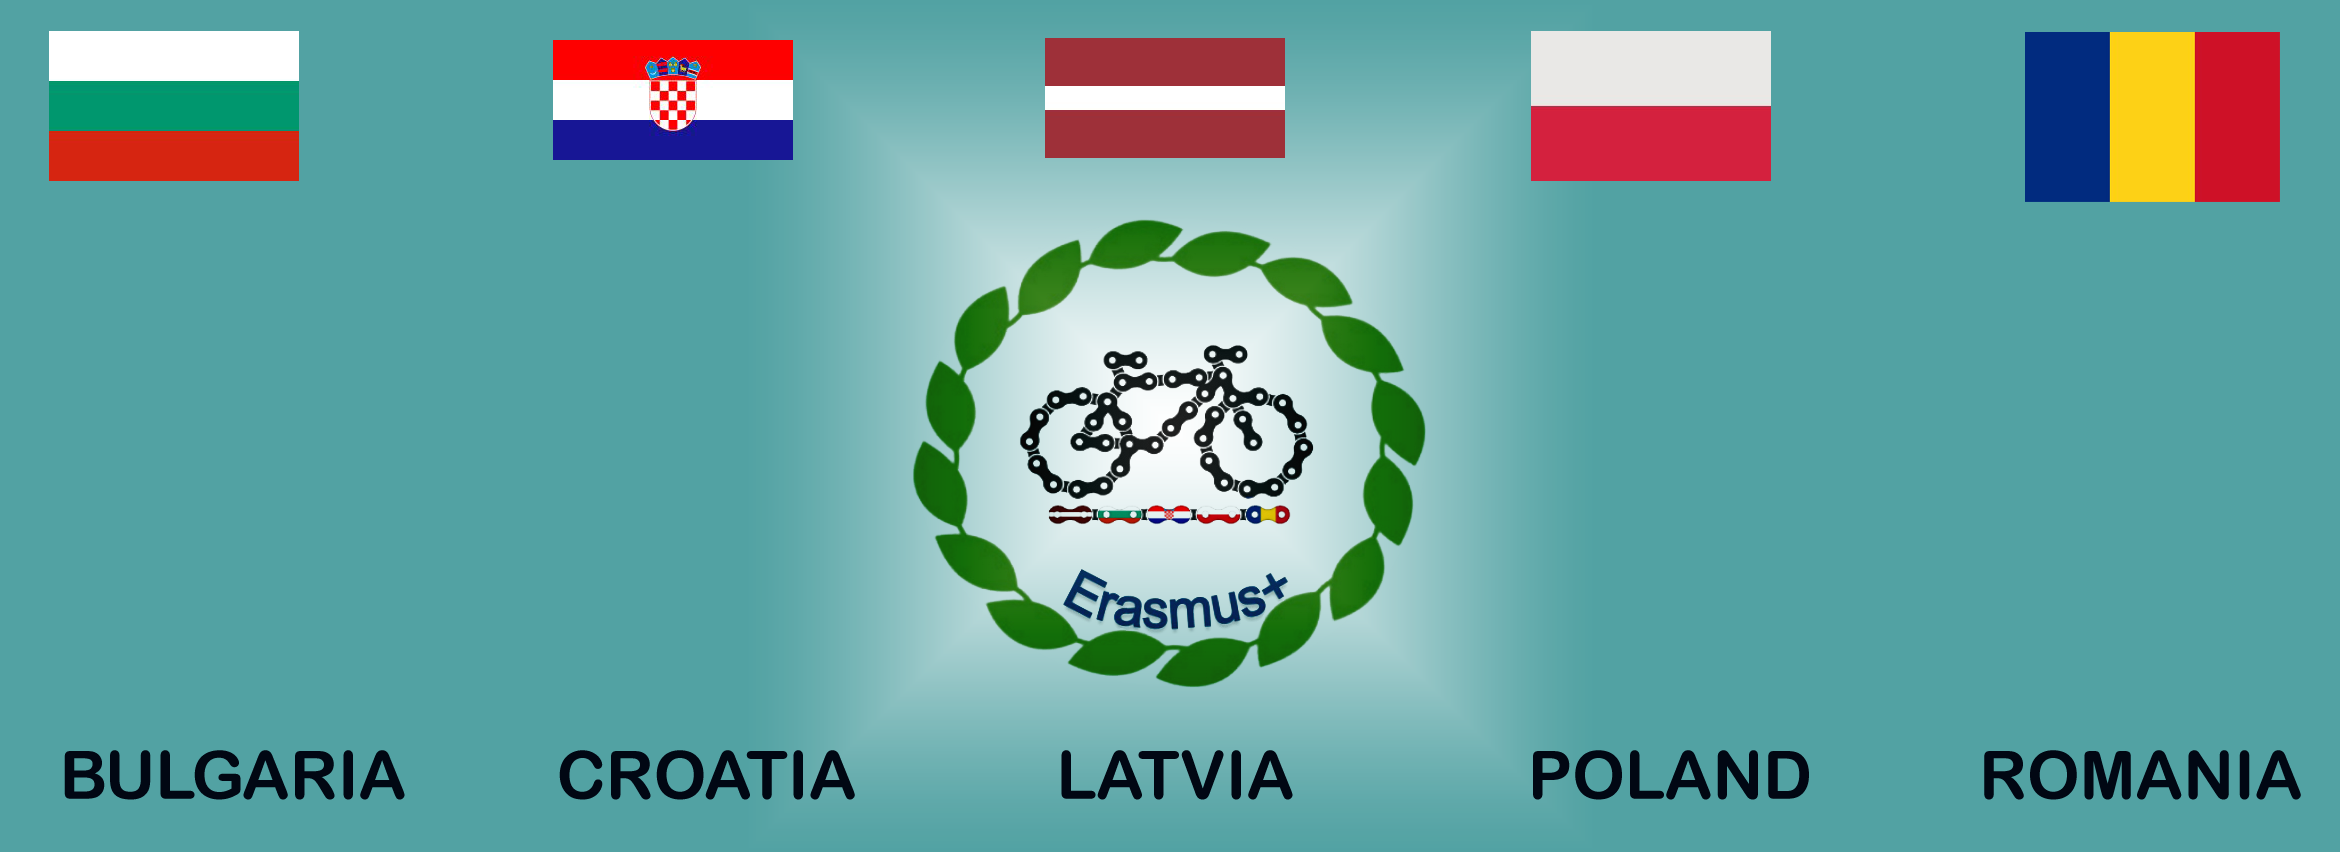 logo erasmus+ oraz flagi Bułgarii, Chorwacji, Łotwy, Polski, Rumunii